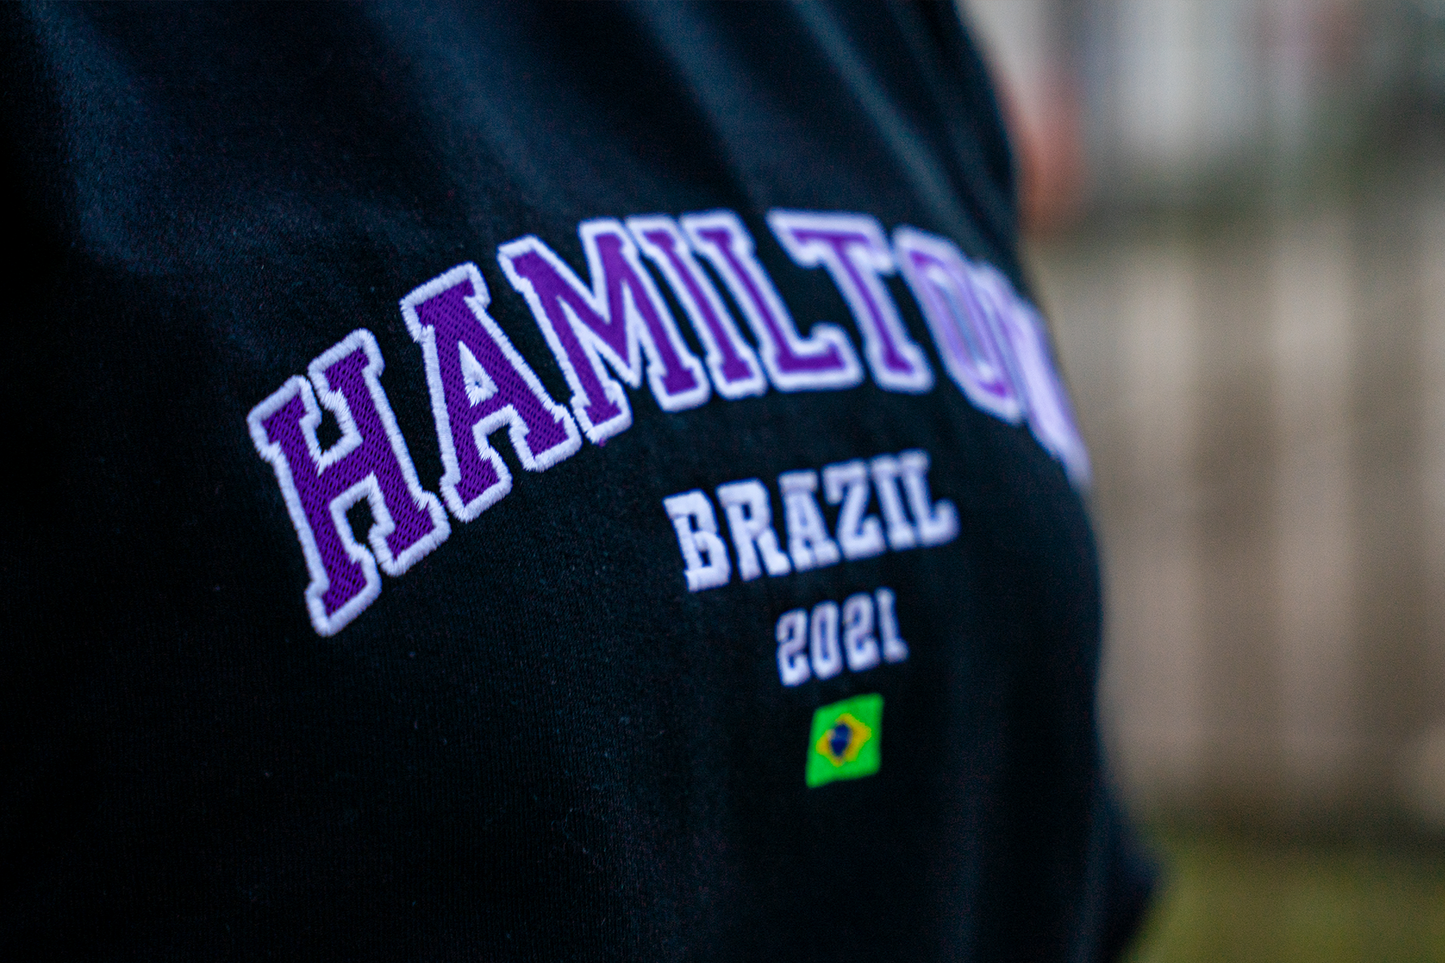 Lewis Hamilton - BRAZIL 2021 | Varsity Sweatshirt